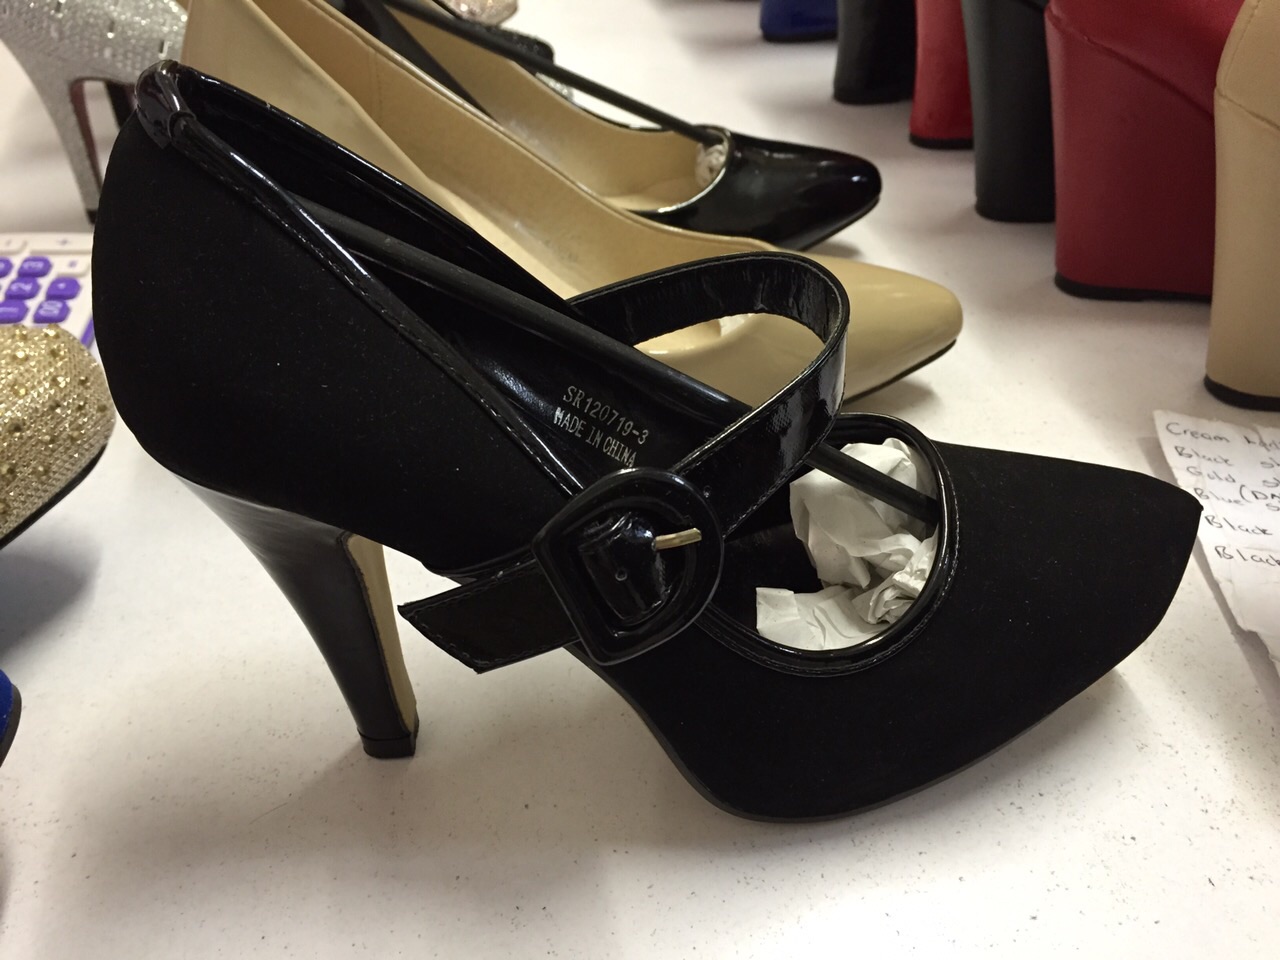 Black Classy Lady heels